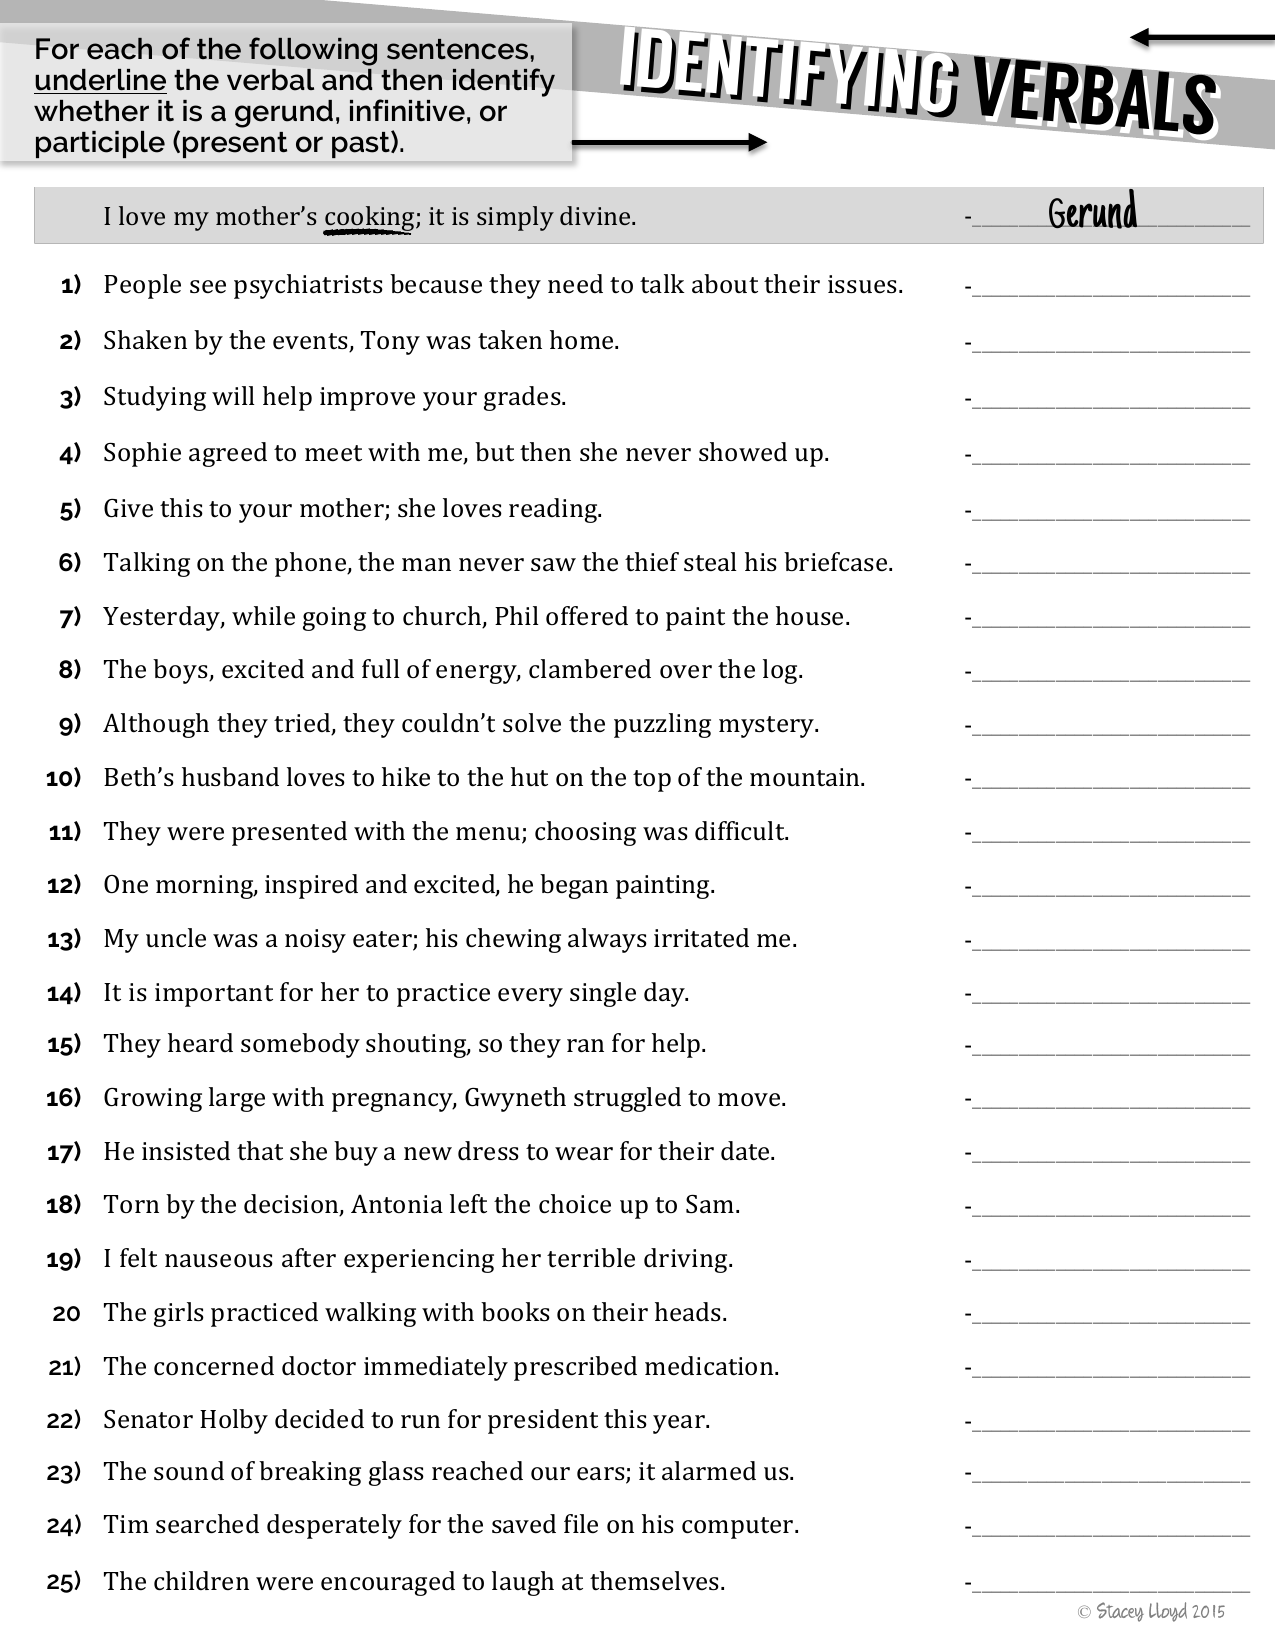 Gerund Phrase Worksheet With Answers